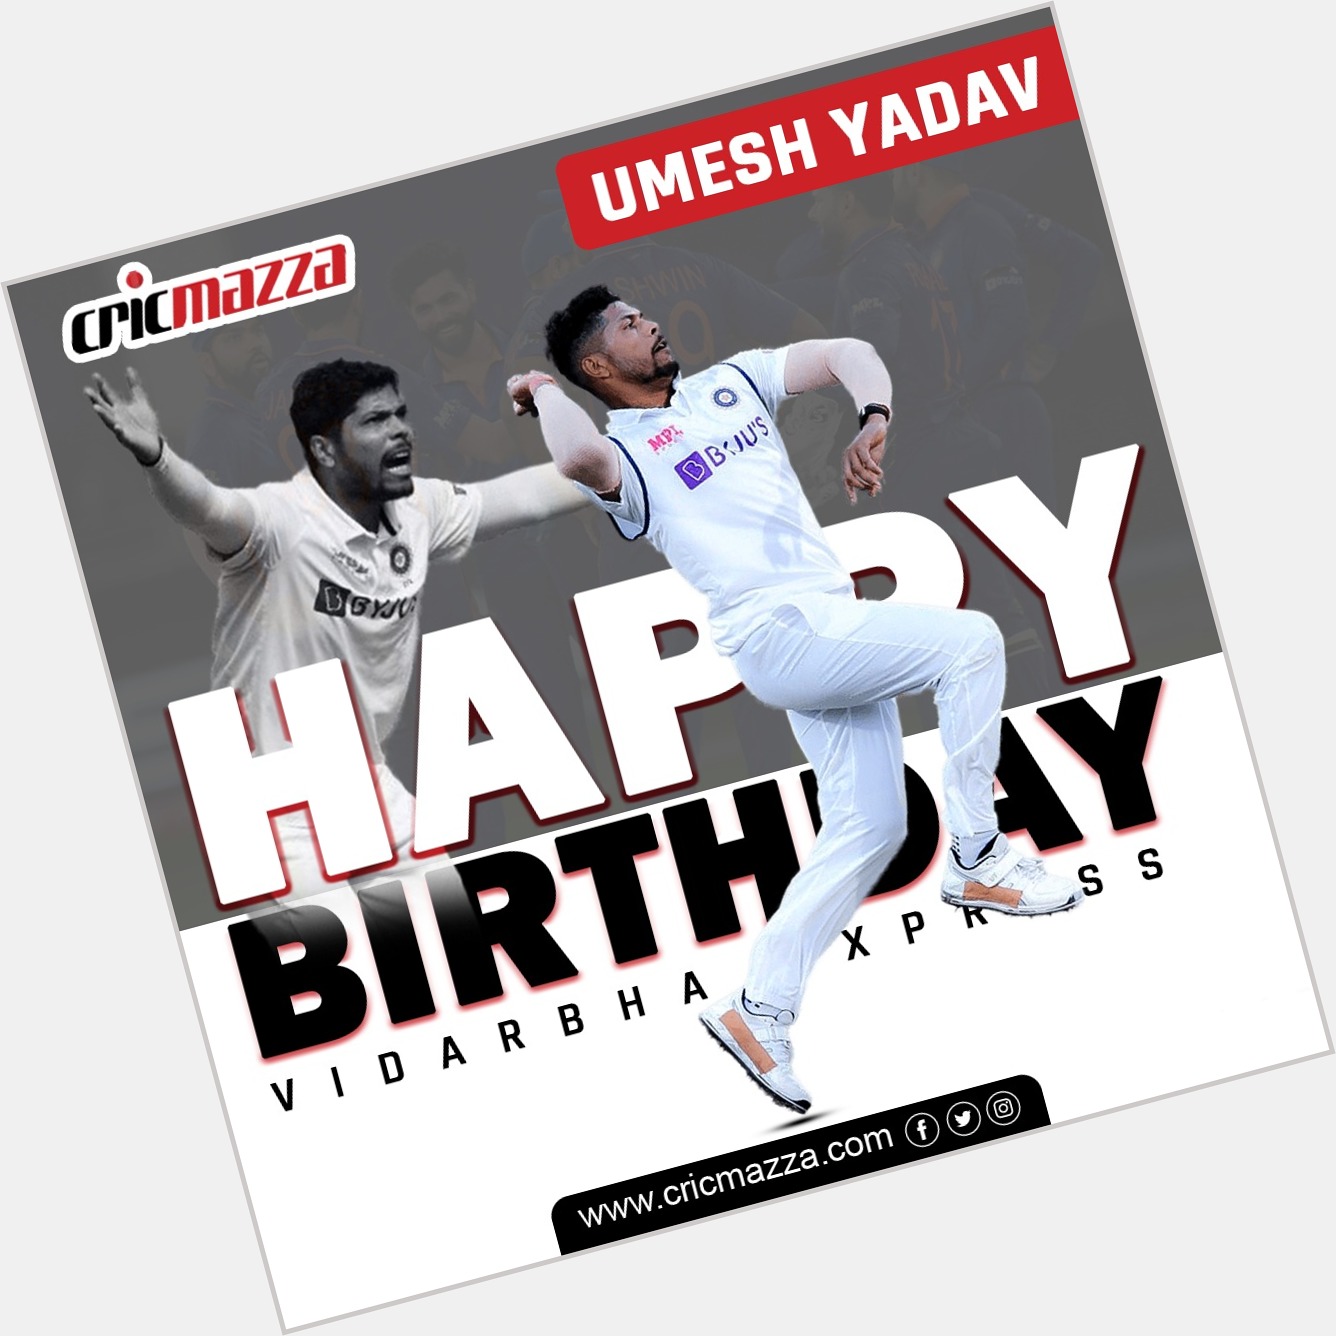 Cricmazza Wishes a very happy birthday Umesh Yadav    